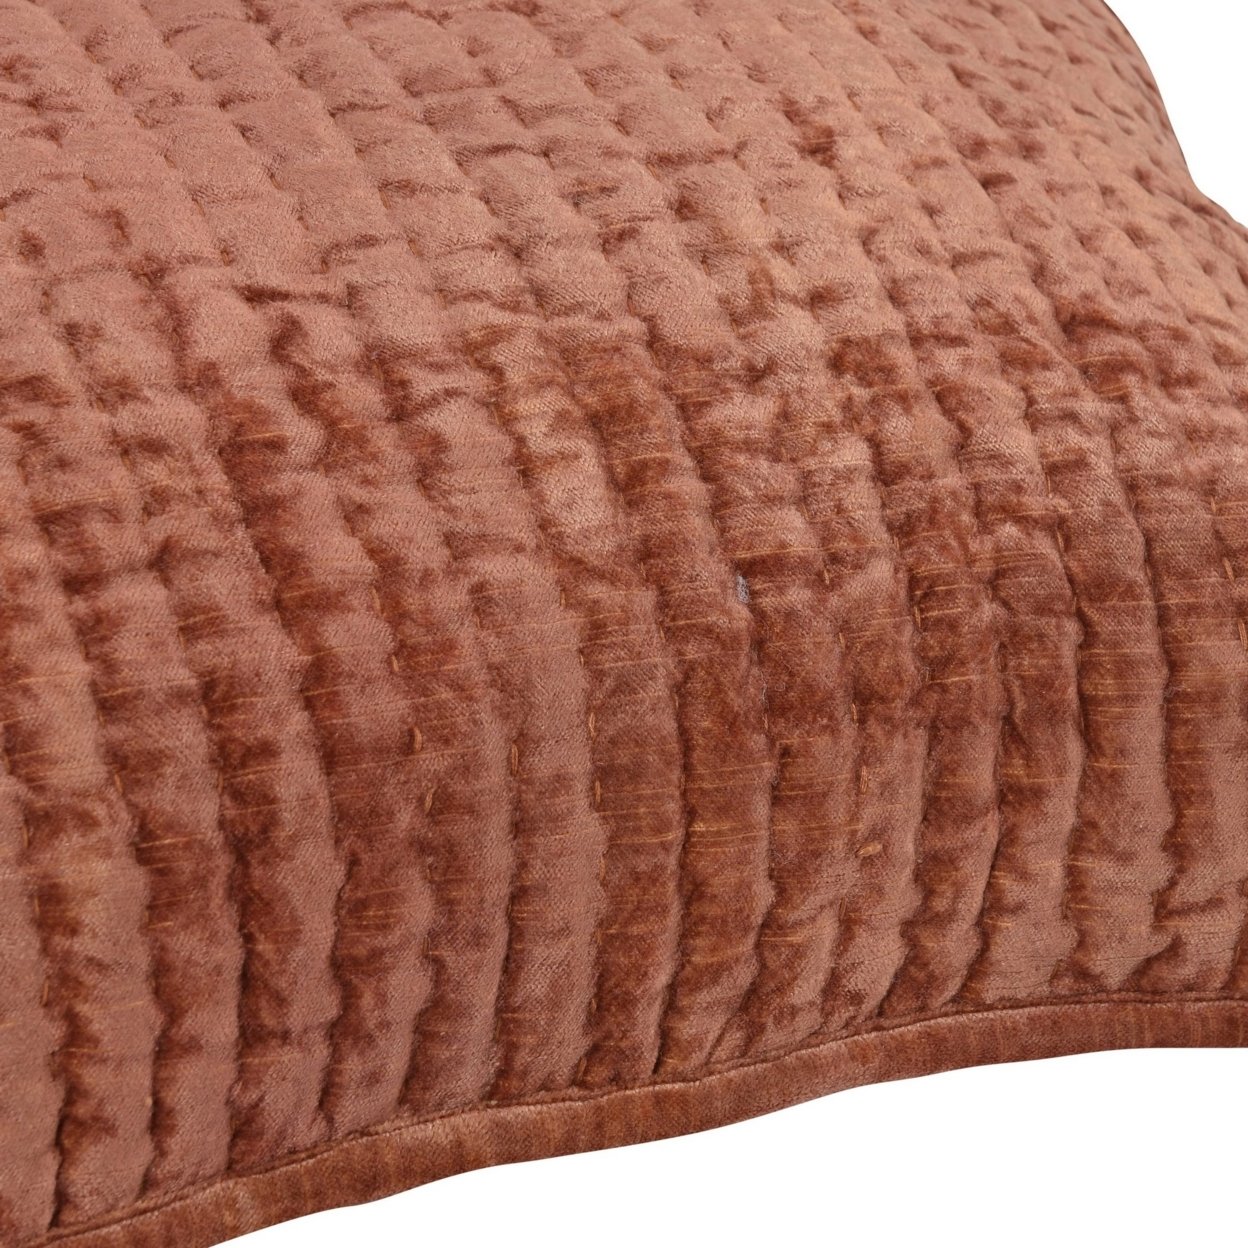 Bili 26 Inch Square Stitched Euro Pillow Sham, Orange Brown Rayon Velvet- Saltoro Sherpi